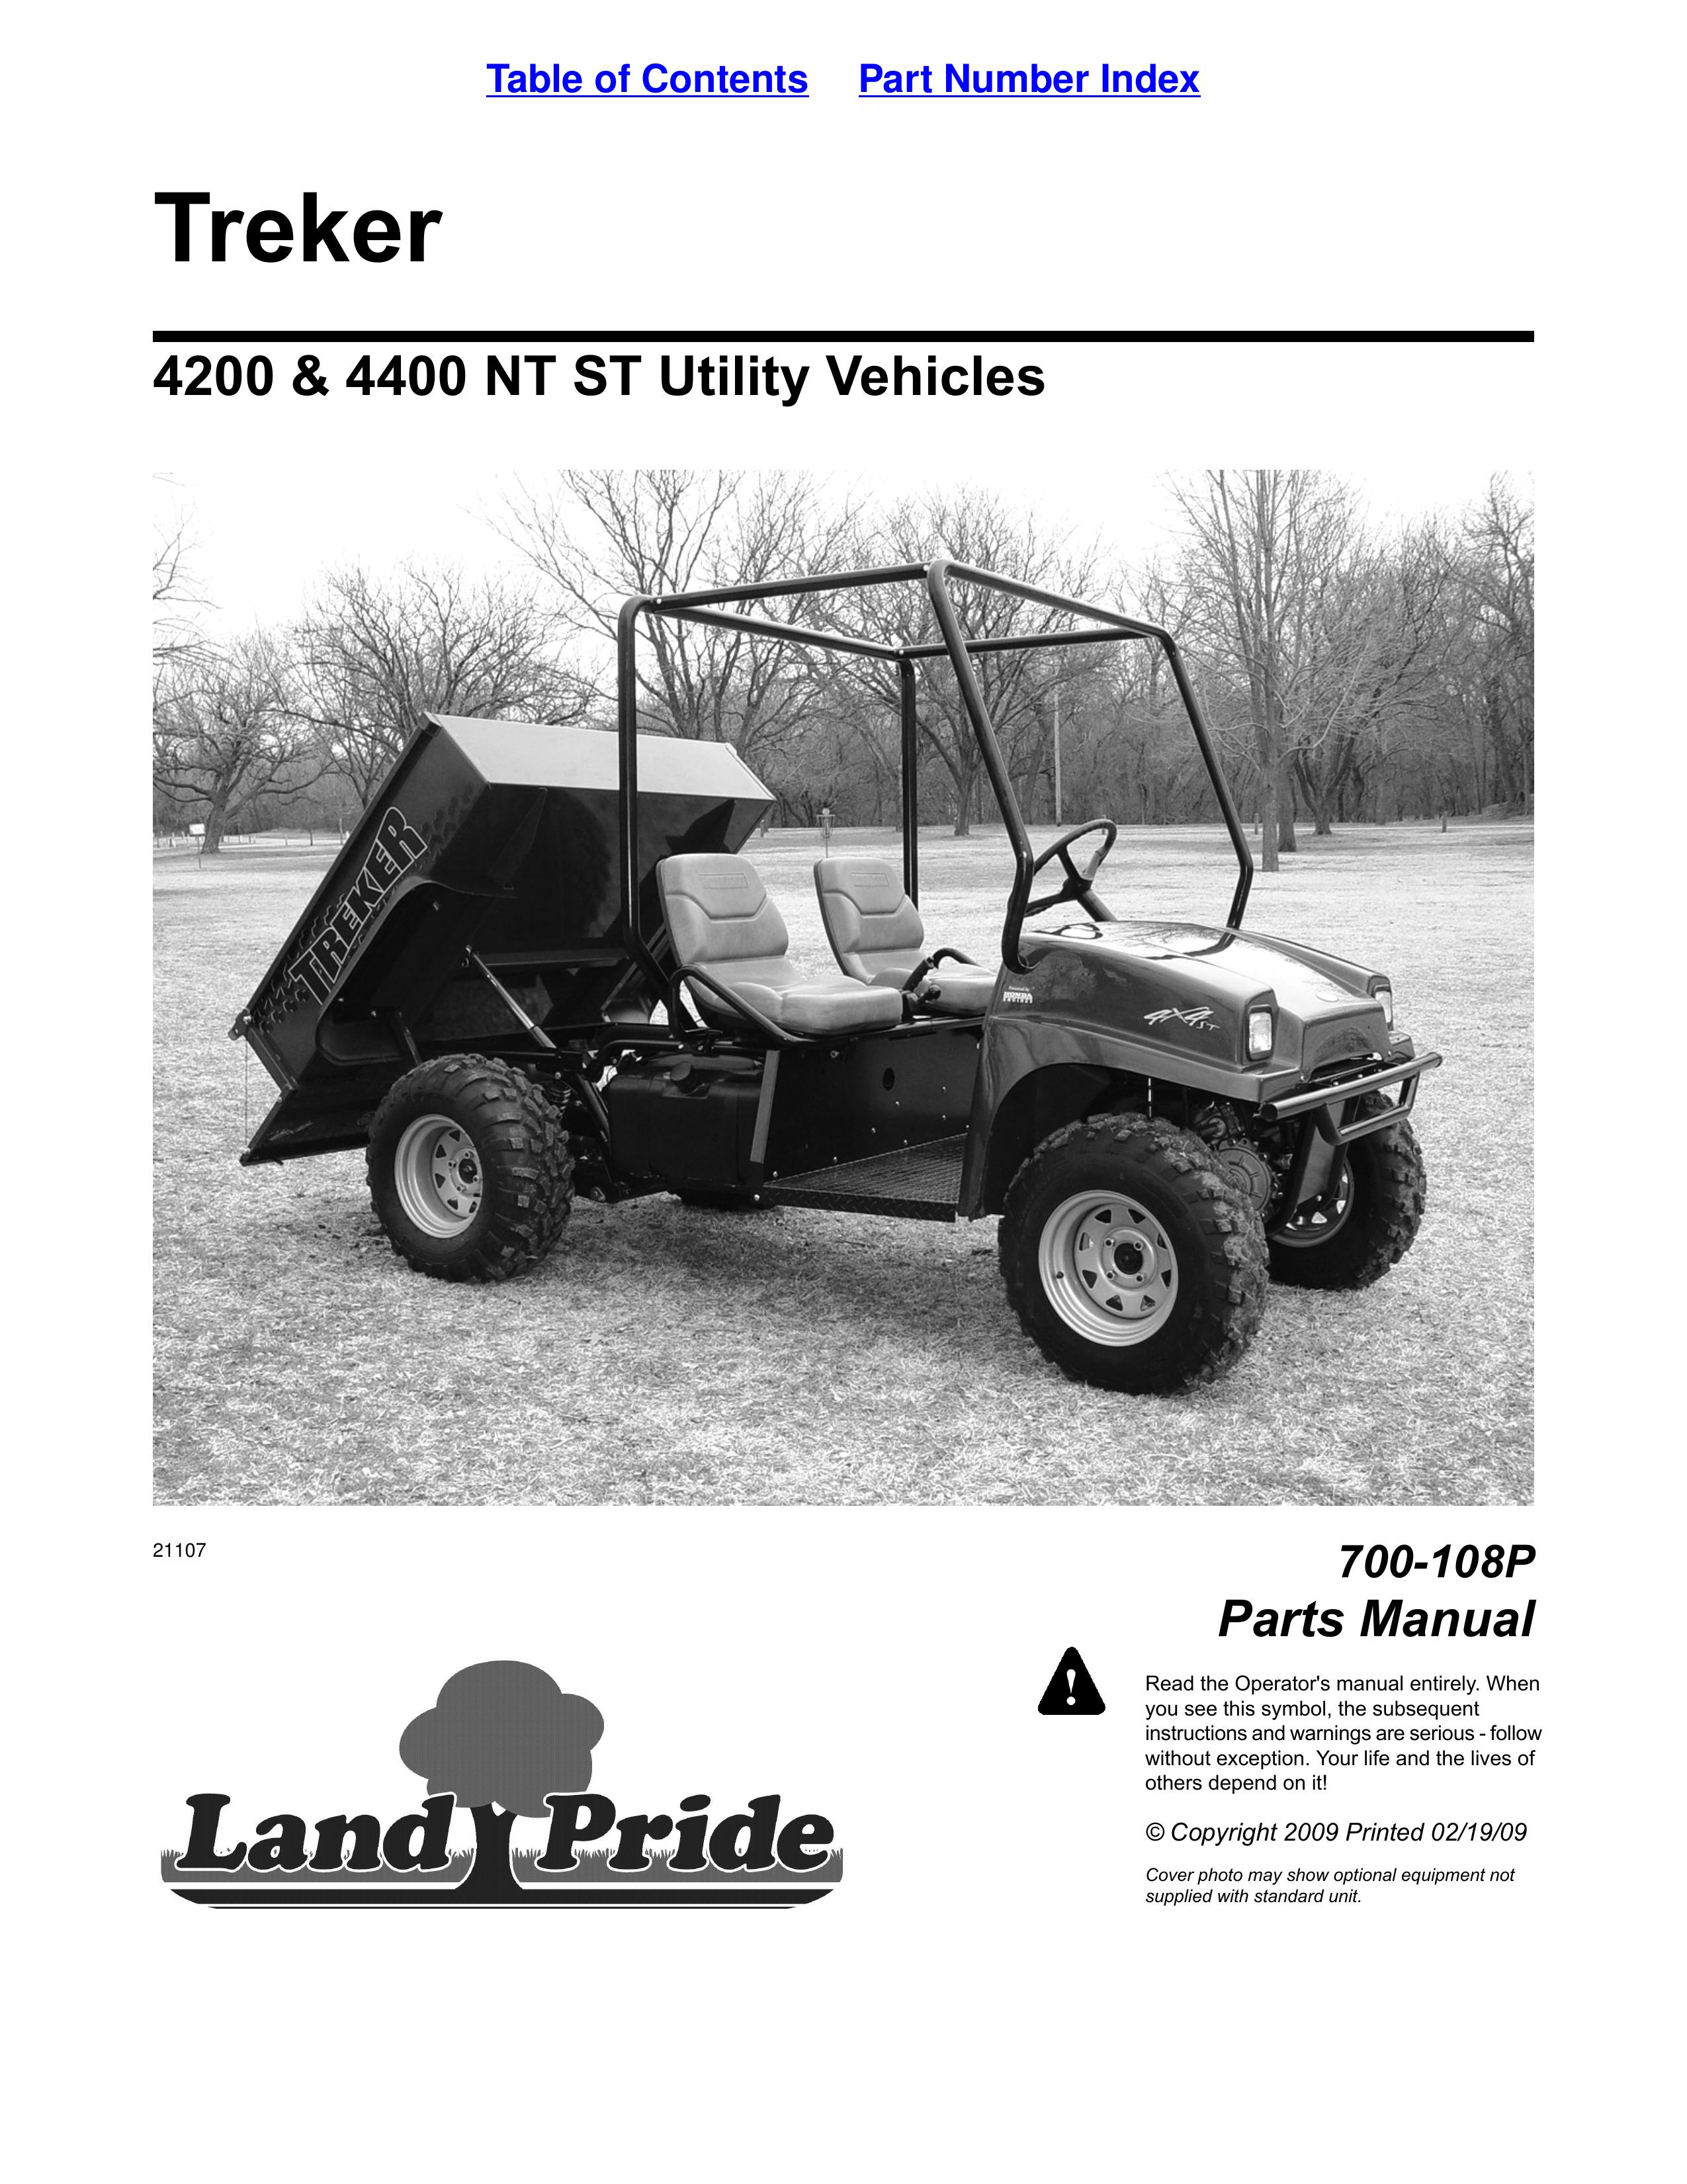 Land Pride 4200NT Utility Vehicle User Manual